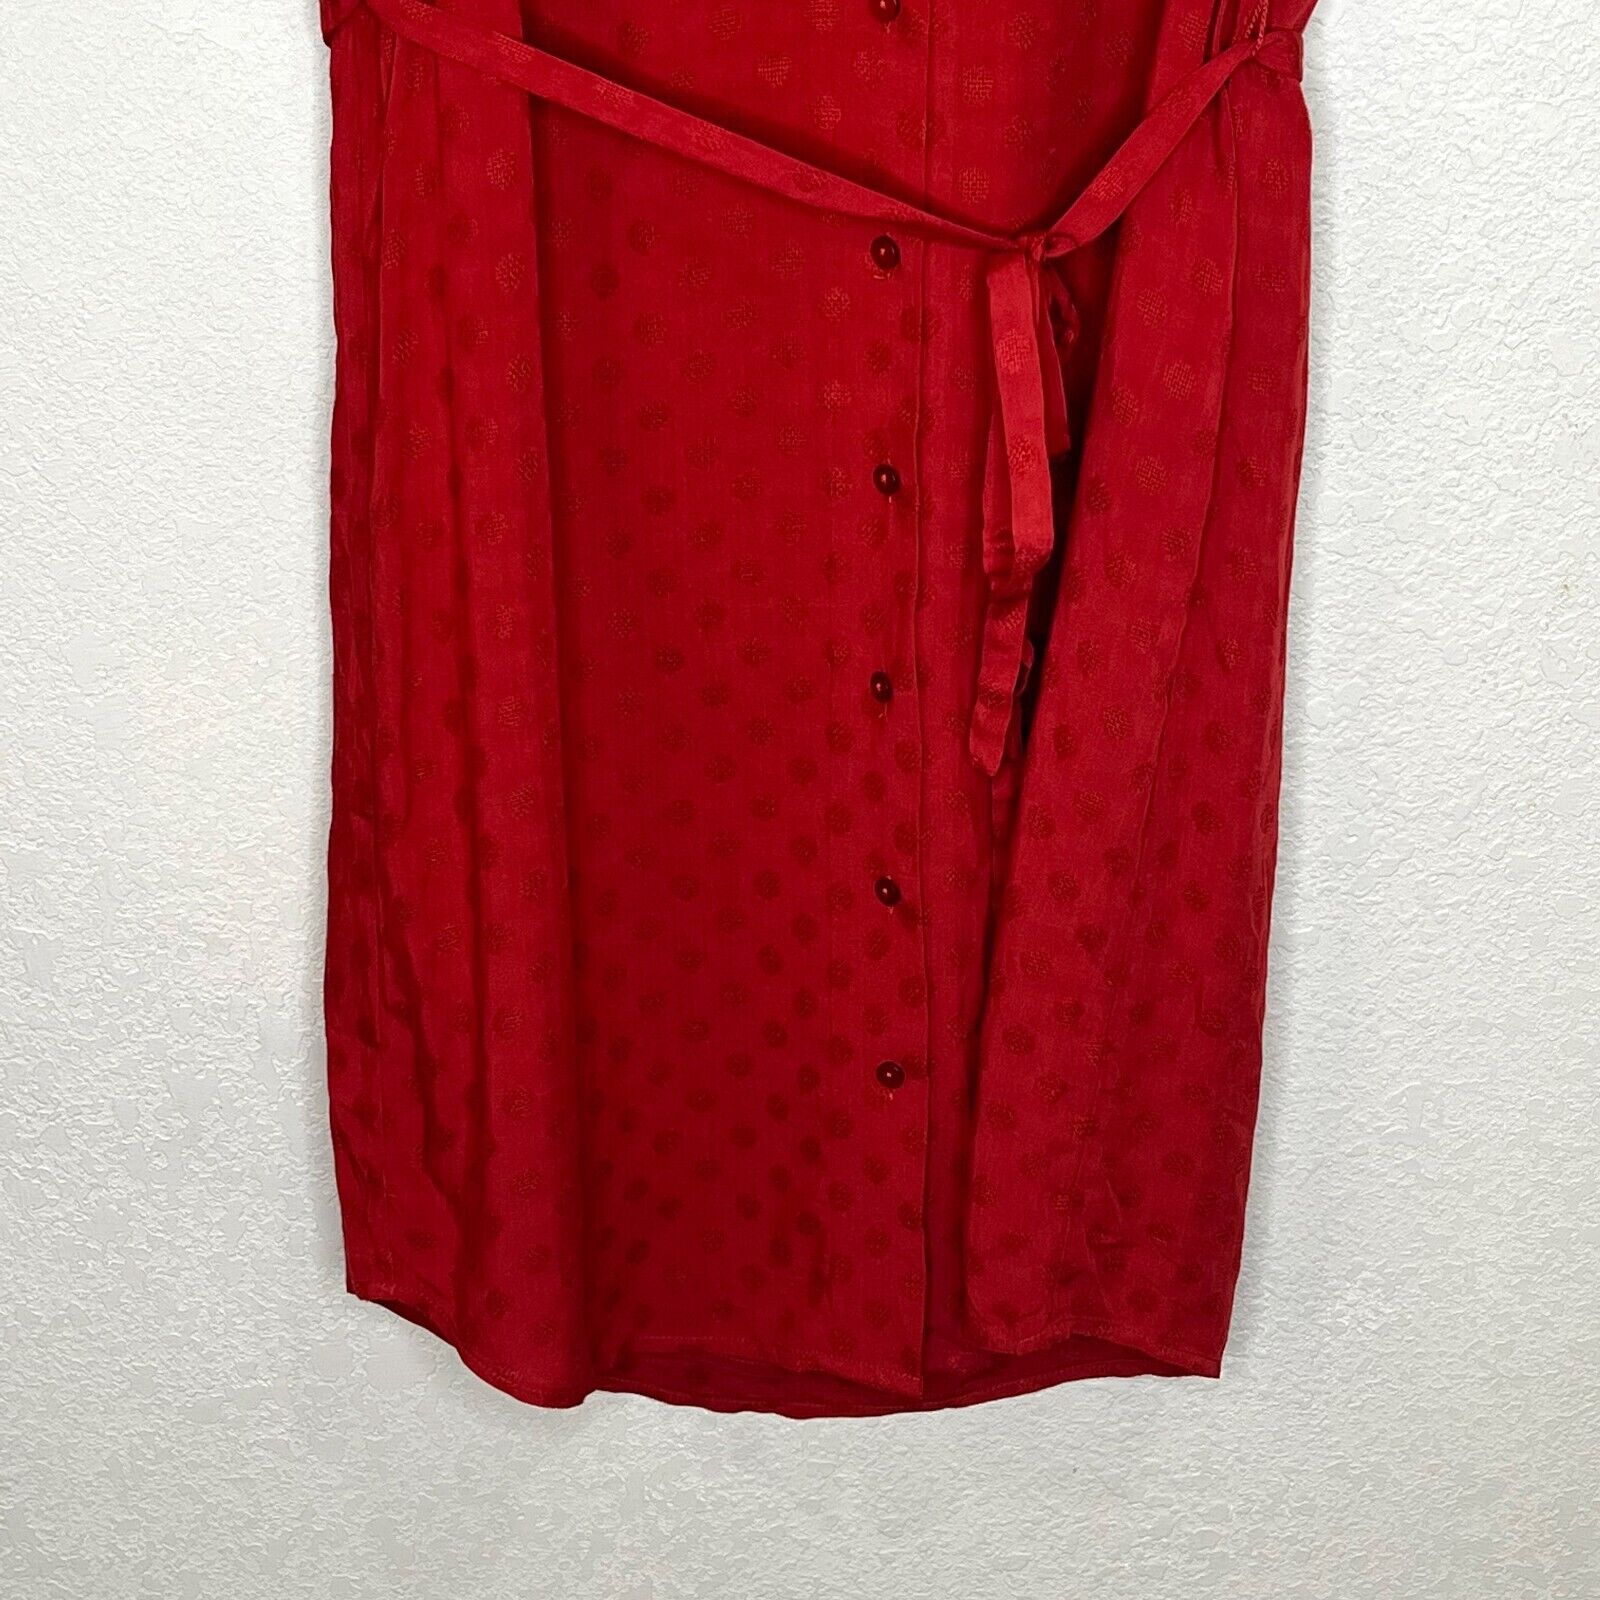 41 HAWTHORN Lorelei Shirt Dress Burnt Orange Textured Button Down Sz S New